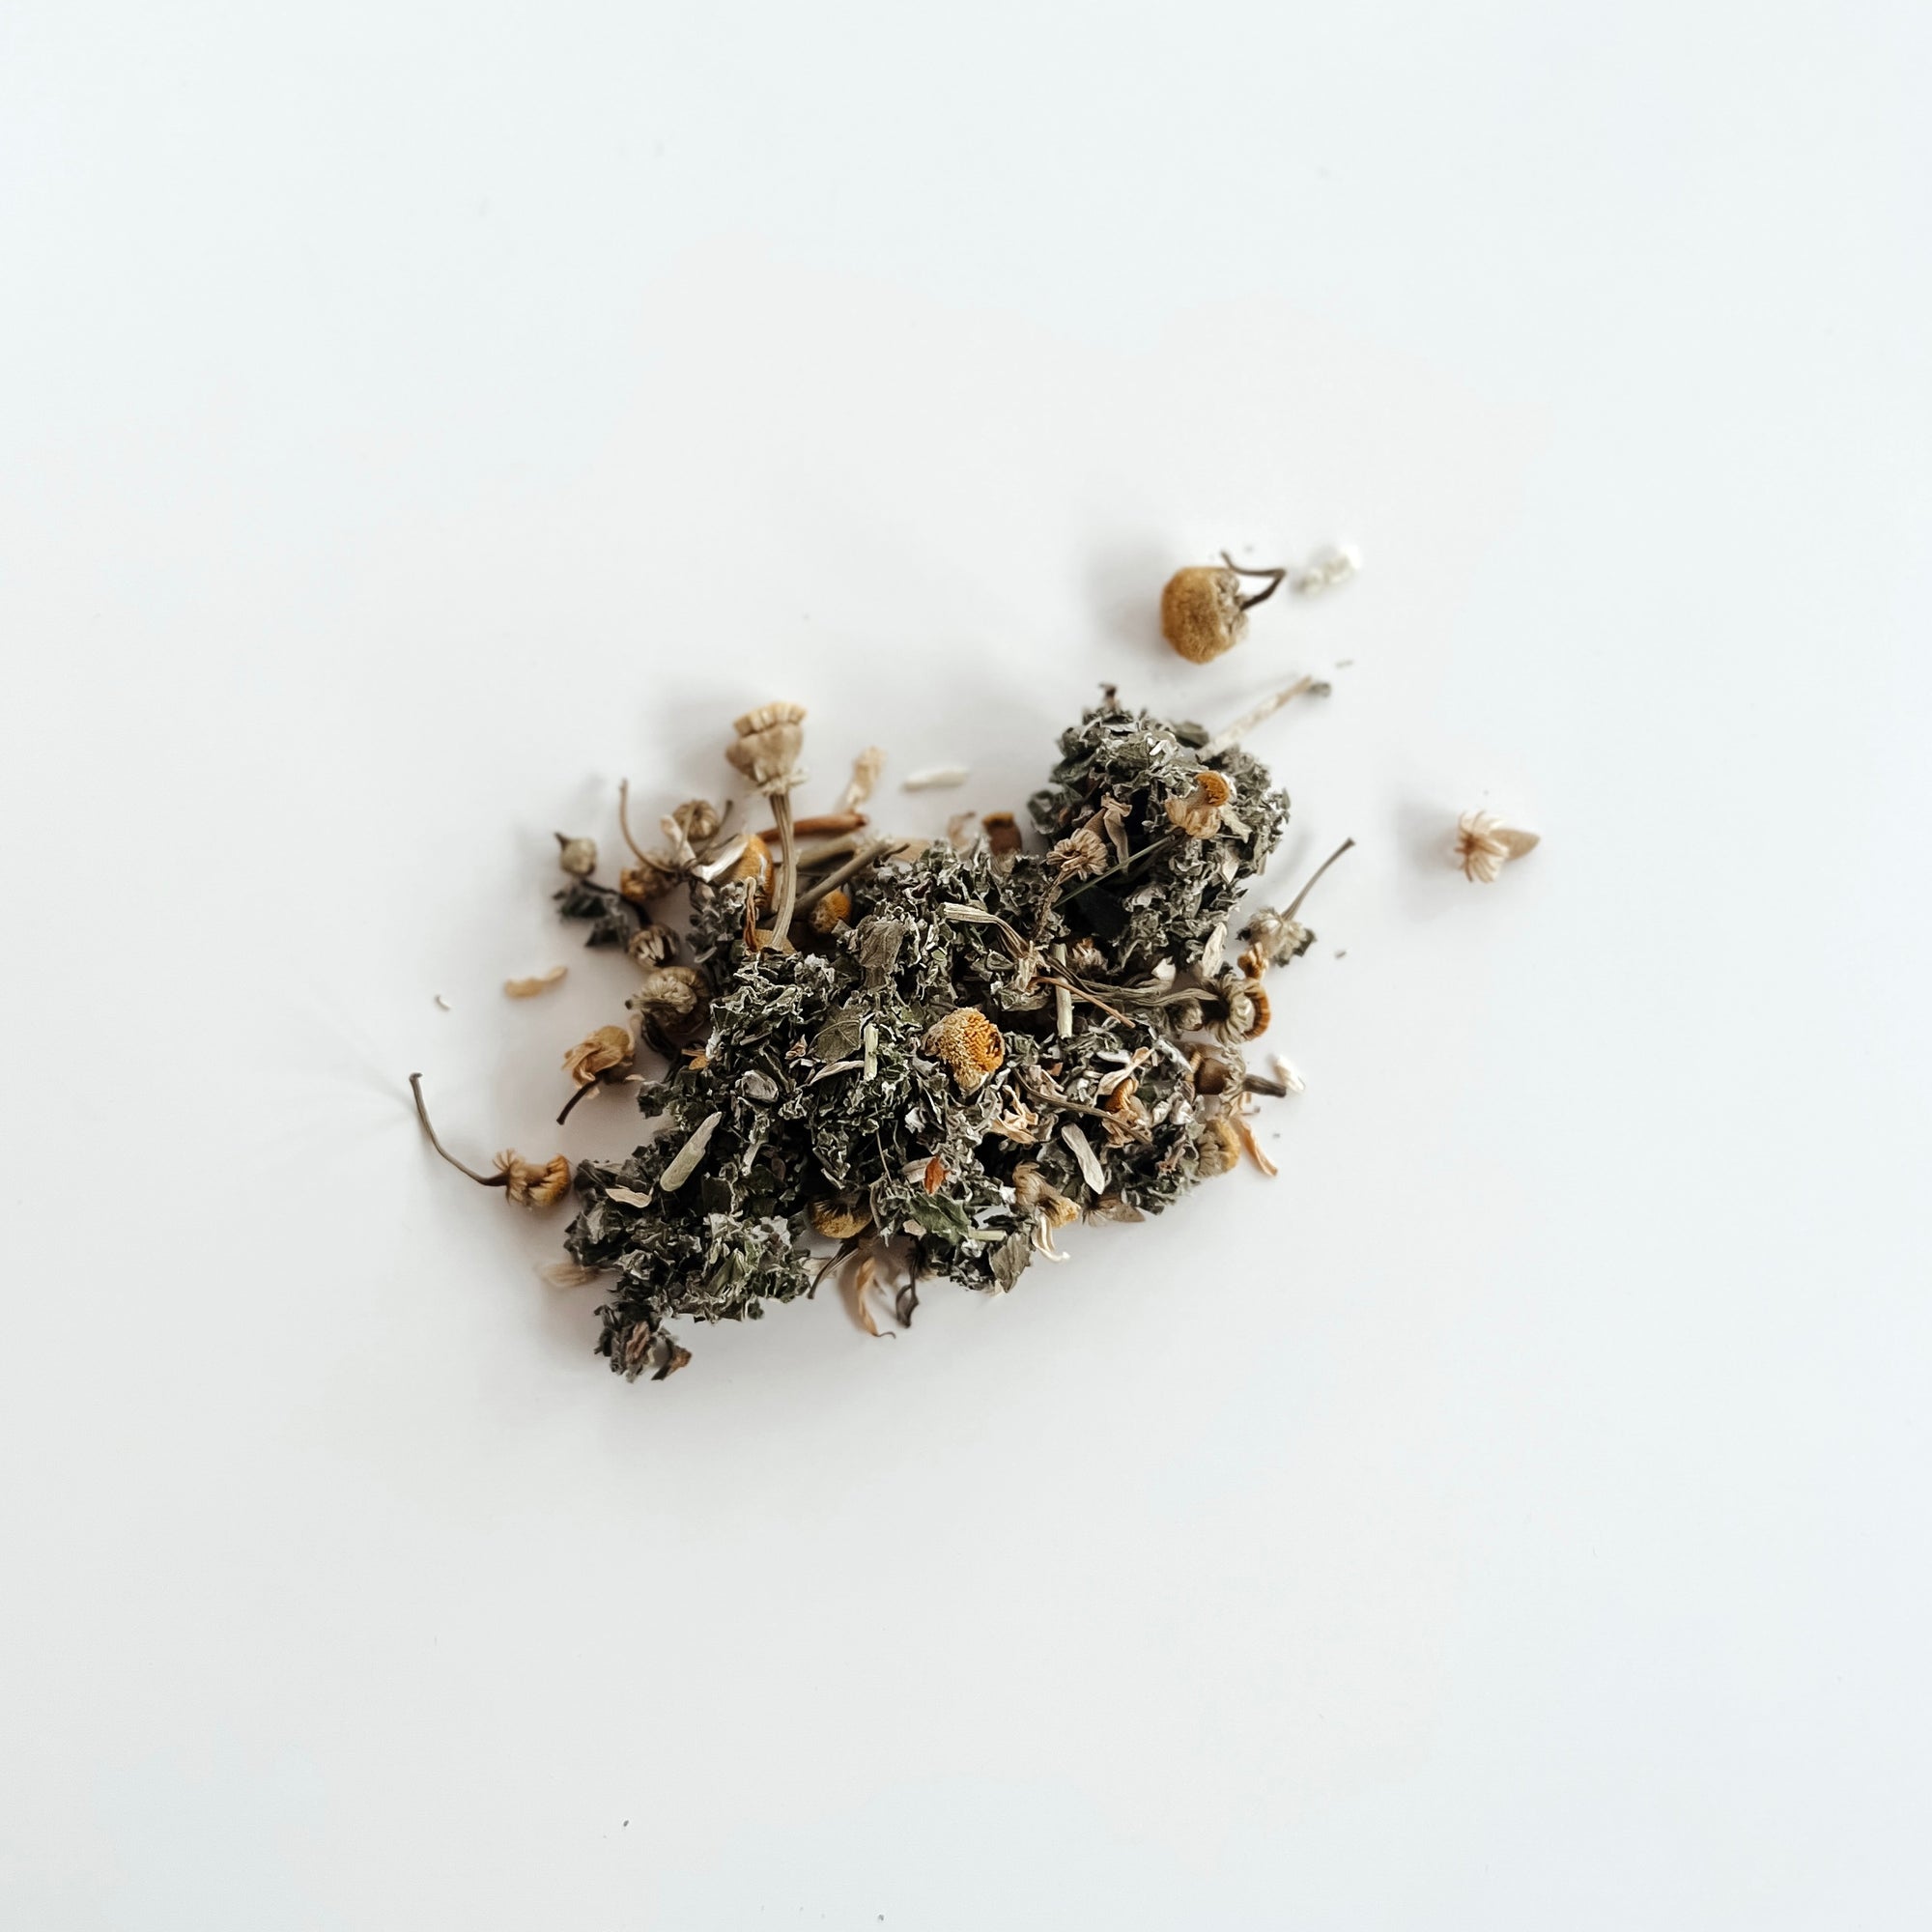 A pile of Clē Naturals' Organic Raspberry Leaf Tea on a plain white background.